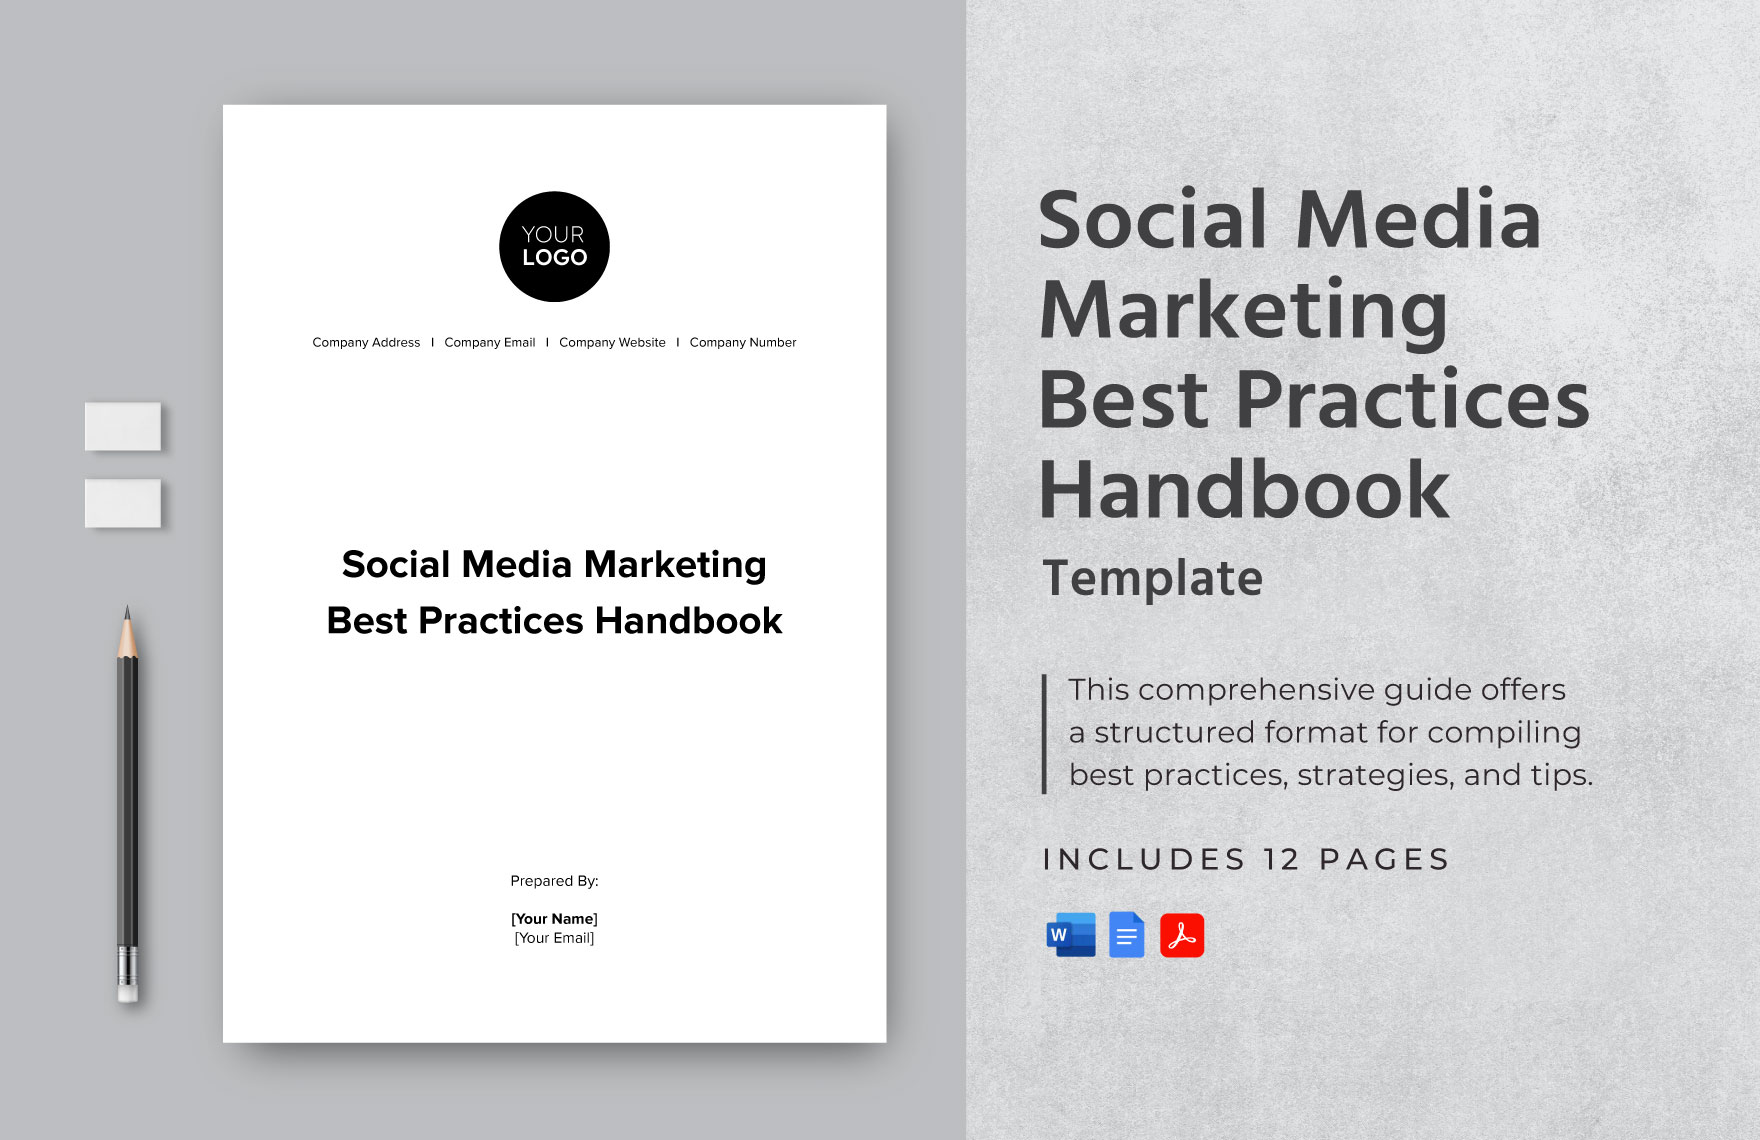 Social Media Marketing Best Practices Handbook Template in Word, Google Docs, PDF